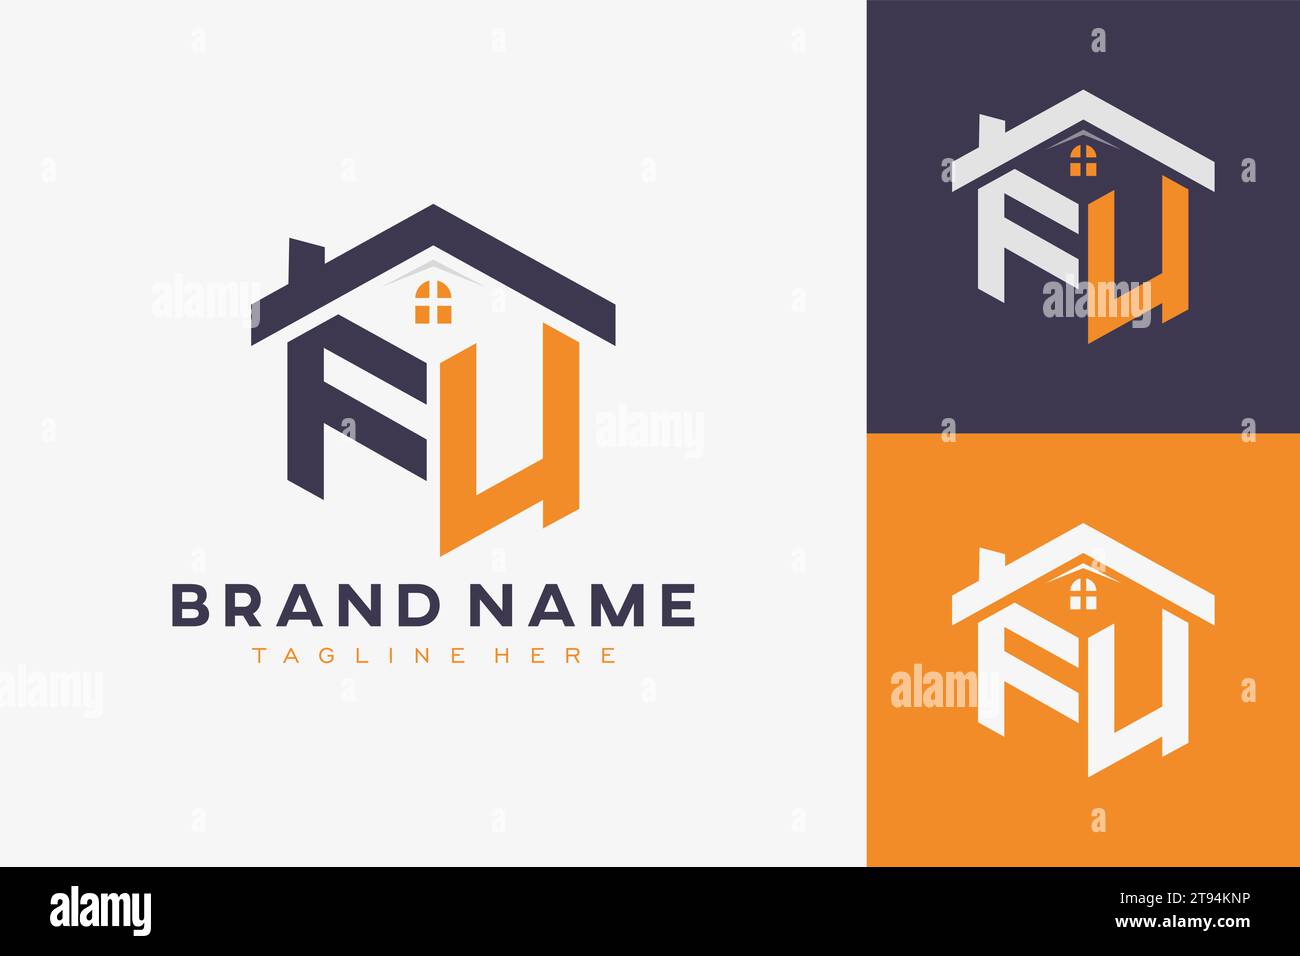 Sechseckiges FU-Hausmonogramm-Logo für Immobilien, Immobilien, Bauunternehmen. Box-förmige Initiale mit fav-Symbolen Vektorgrafik templ Stock Vektor